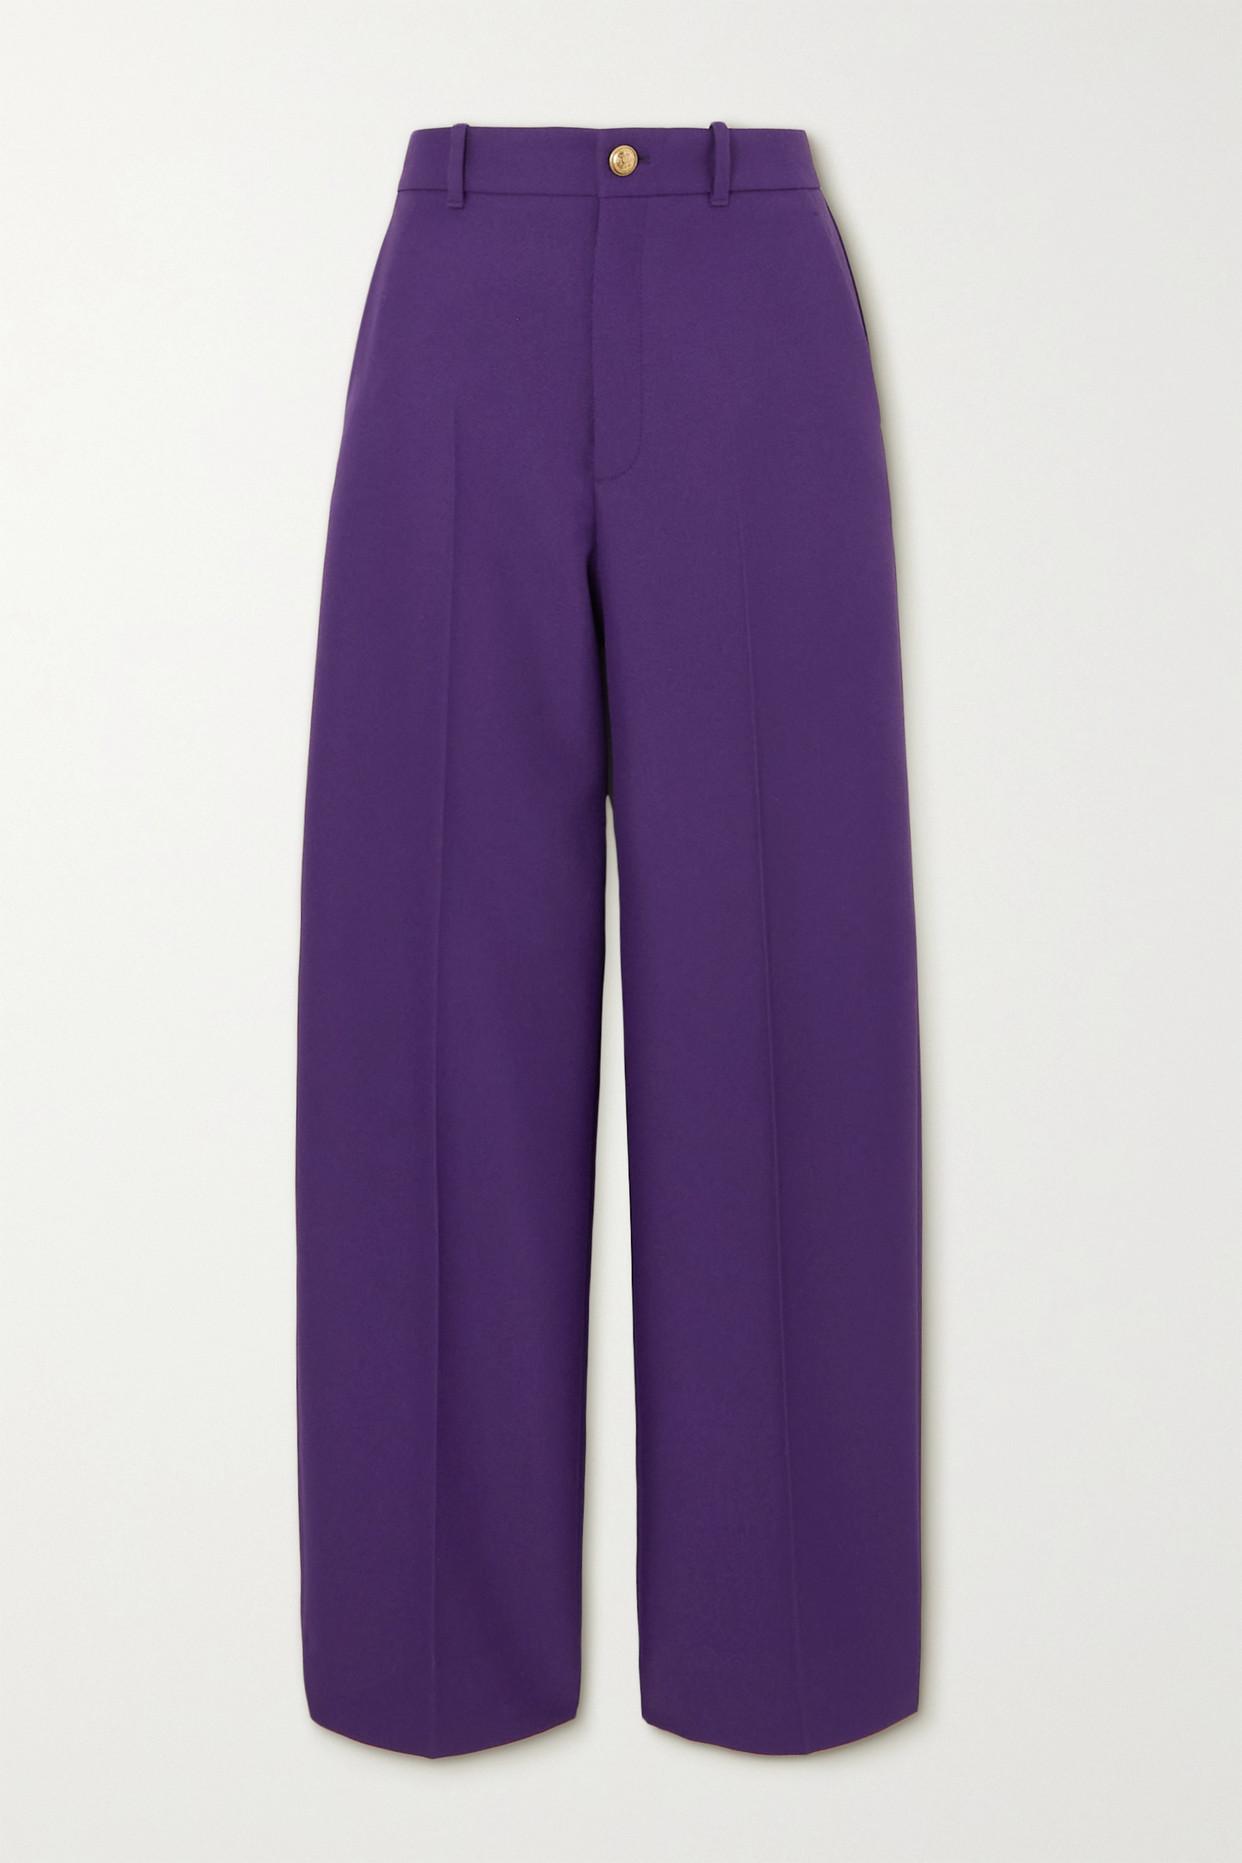 Gucci Drill Wide-leg Pants in Purple | Lyst